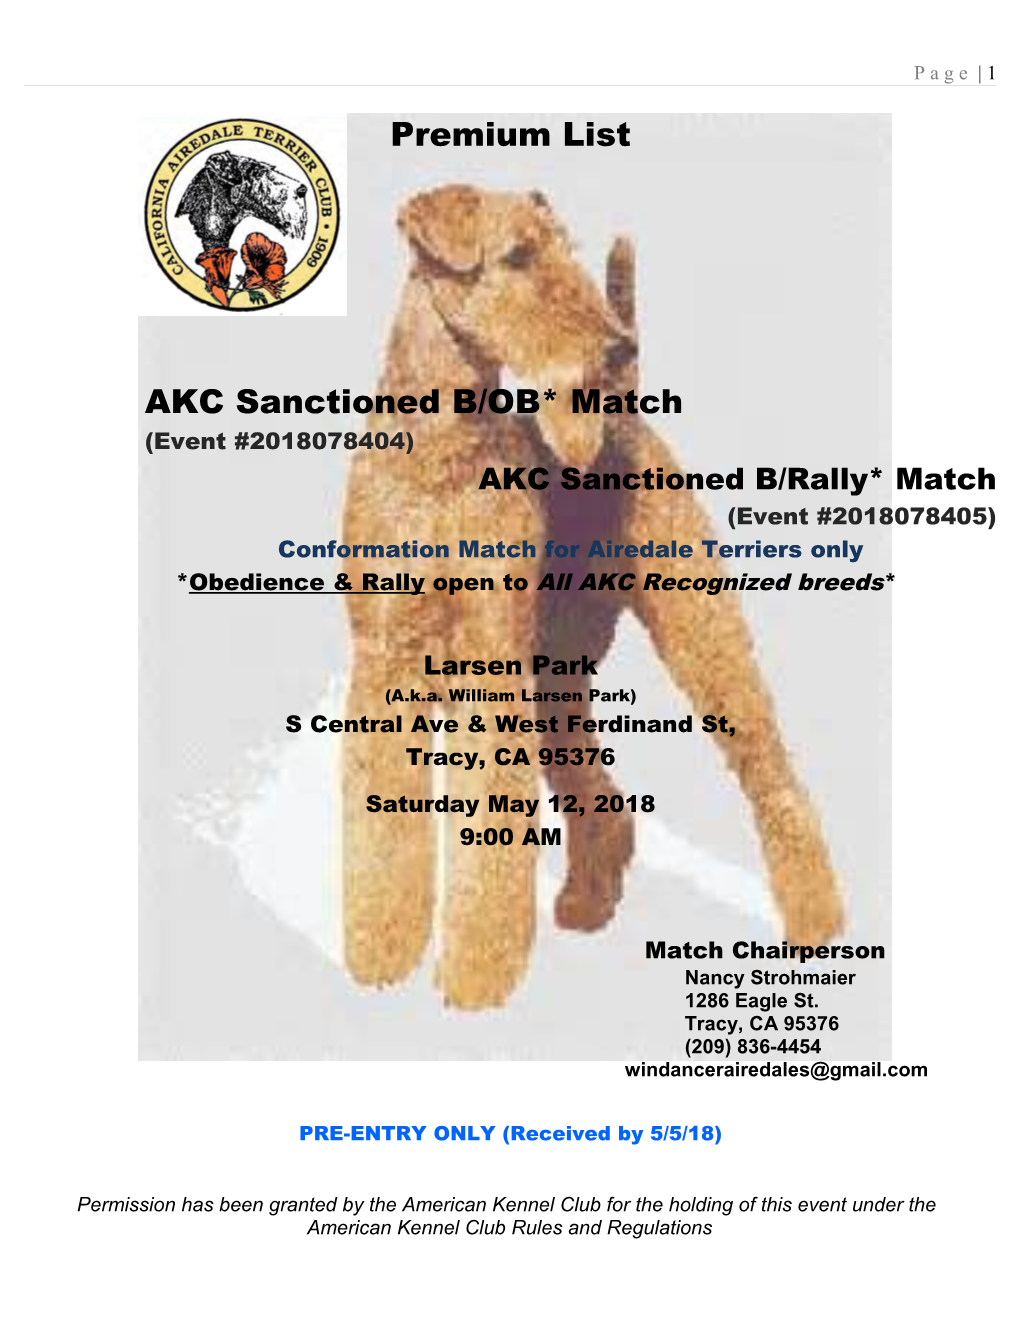 AKC Sanctioned B/Rally*Match